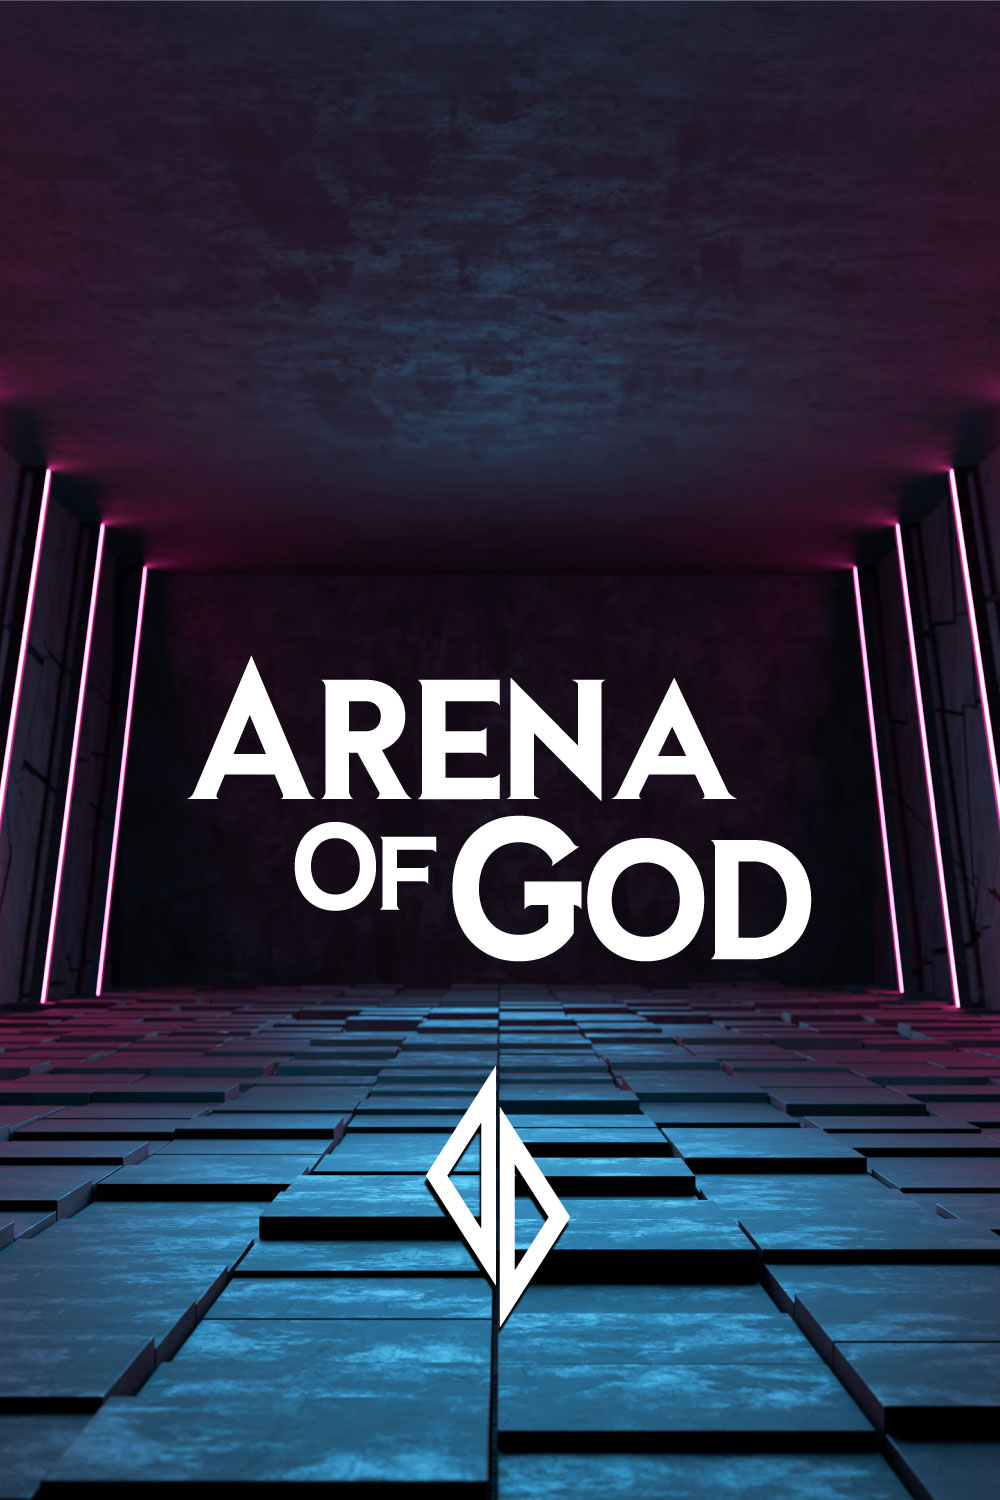 ARENA OF GOD FONT pinterest preview image.